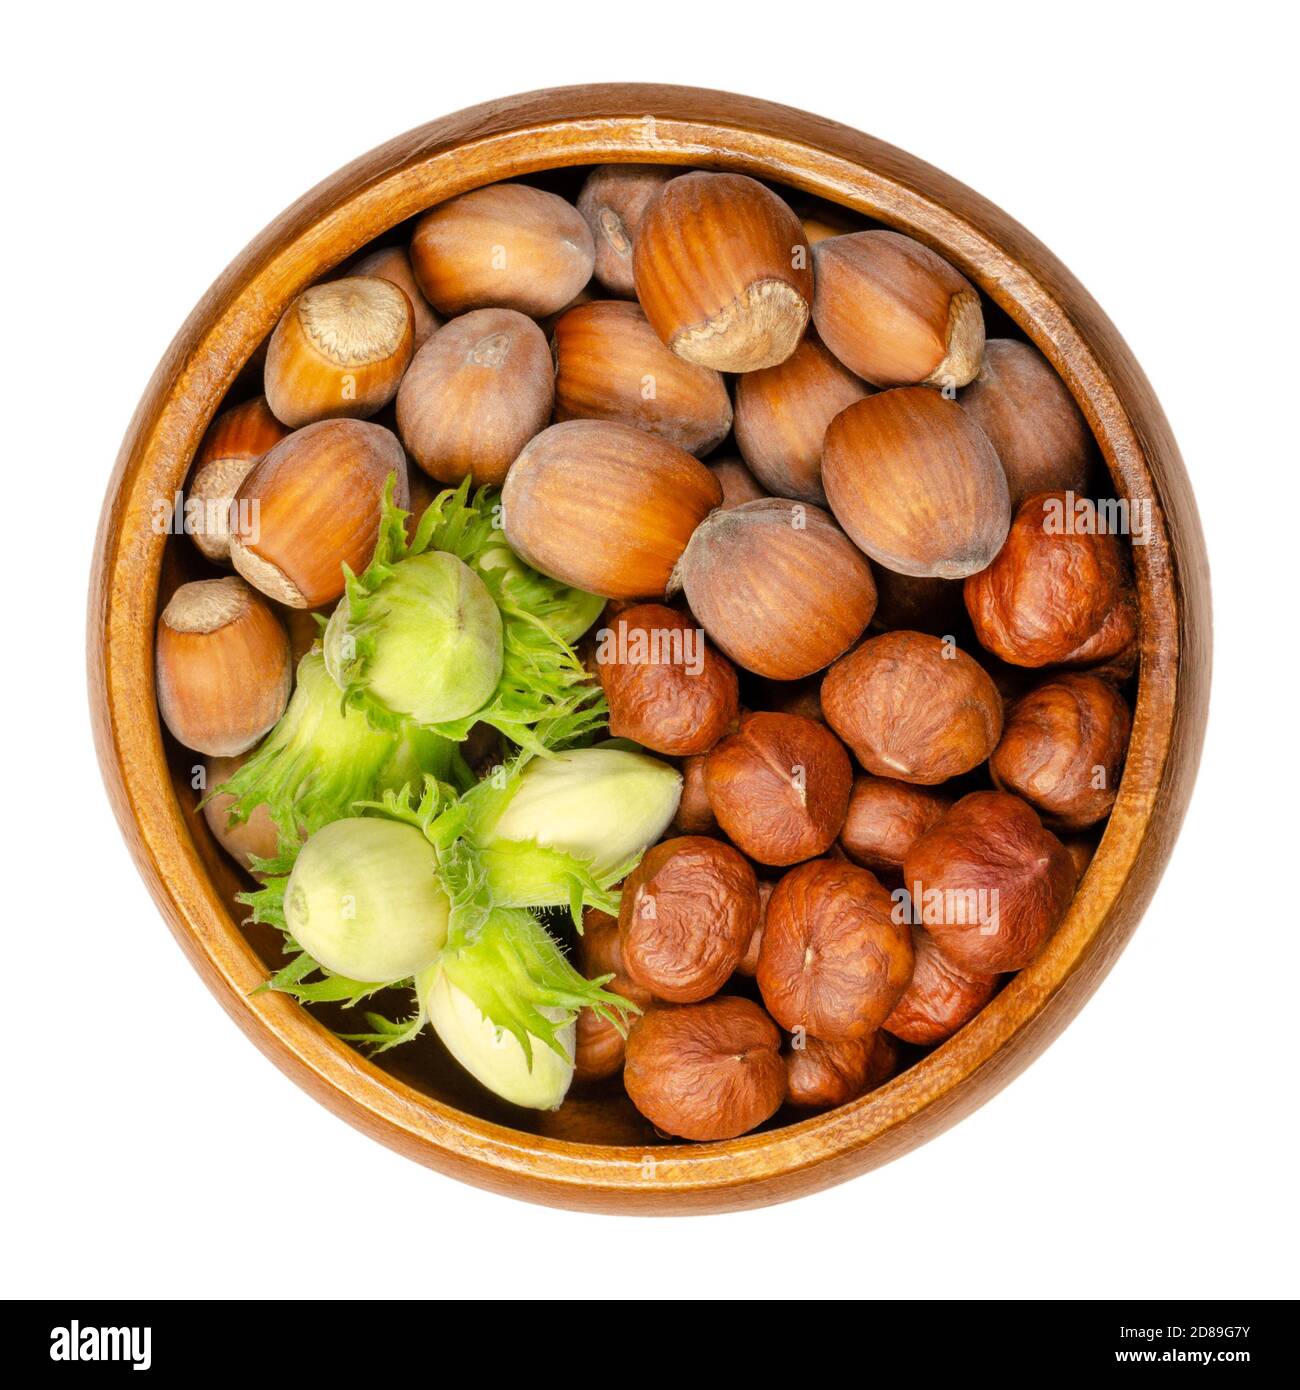 Ripe and unripe hazelnuts in a wooden bowl. Green, unripe hazelnuts in husk with shelled and unshelled hazelnuts. Seeds of Corylus avellana. Stock Photo